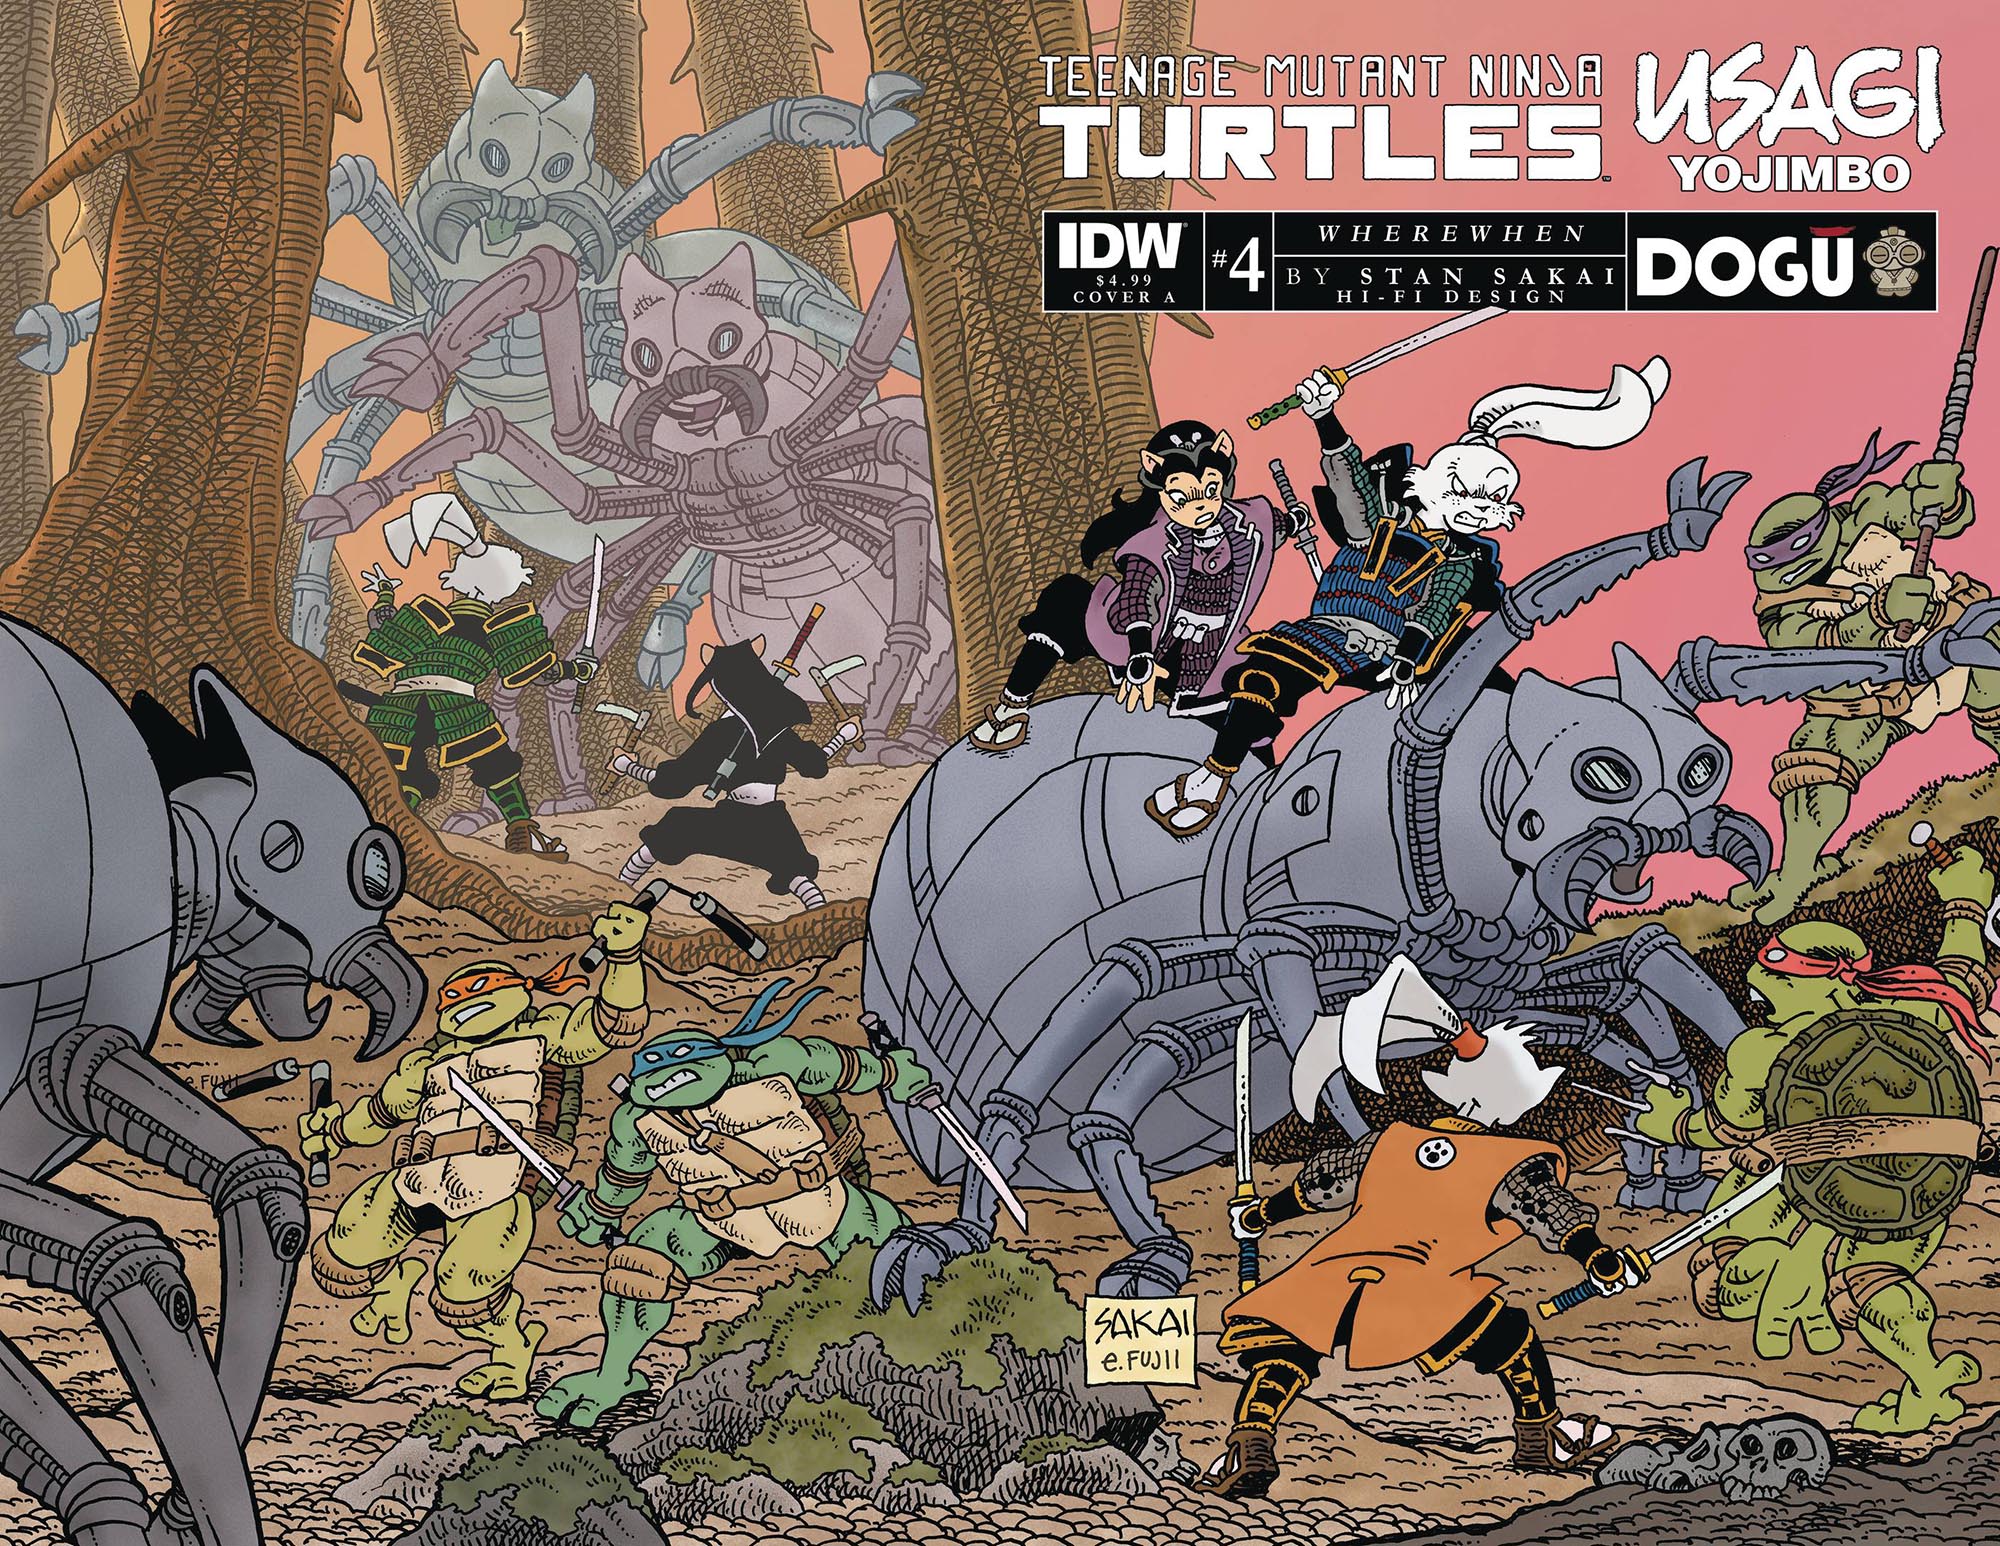 Teenage Mutant Ninja Turtles/Usagi Yojimbo WhereWhen No. 4 | Usagi 